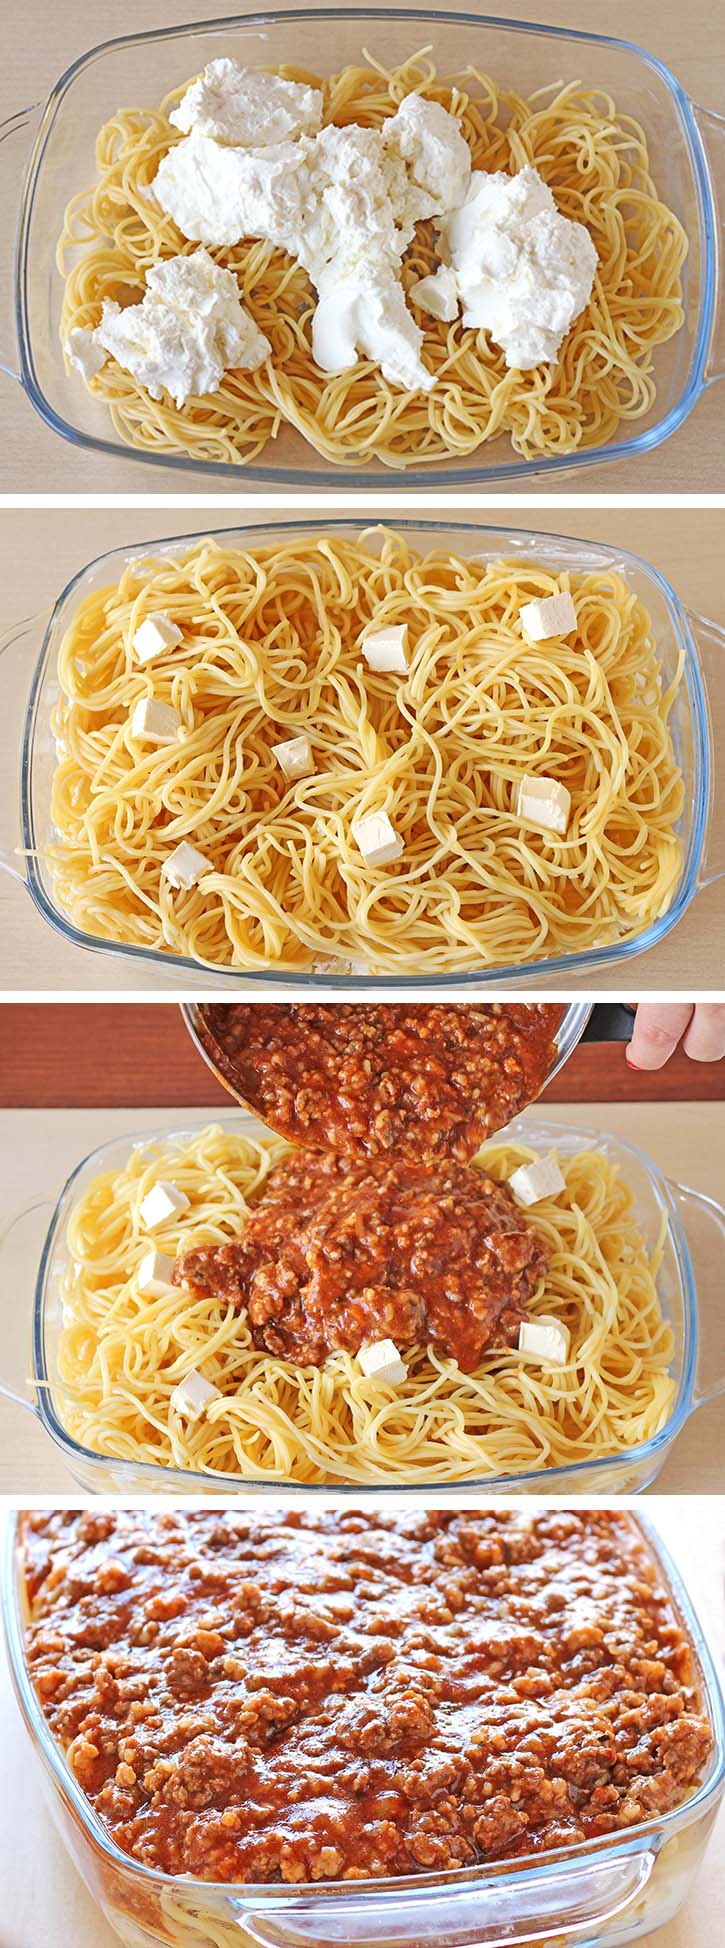 Spaghetti, spaghetti sauce, beef and cream cheese mixture meal ... that tastes like a million bucks.